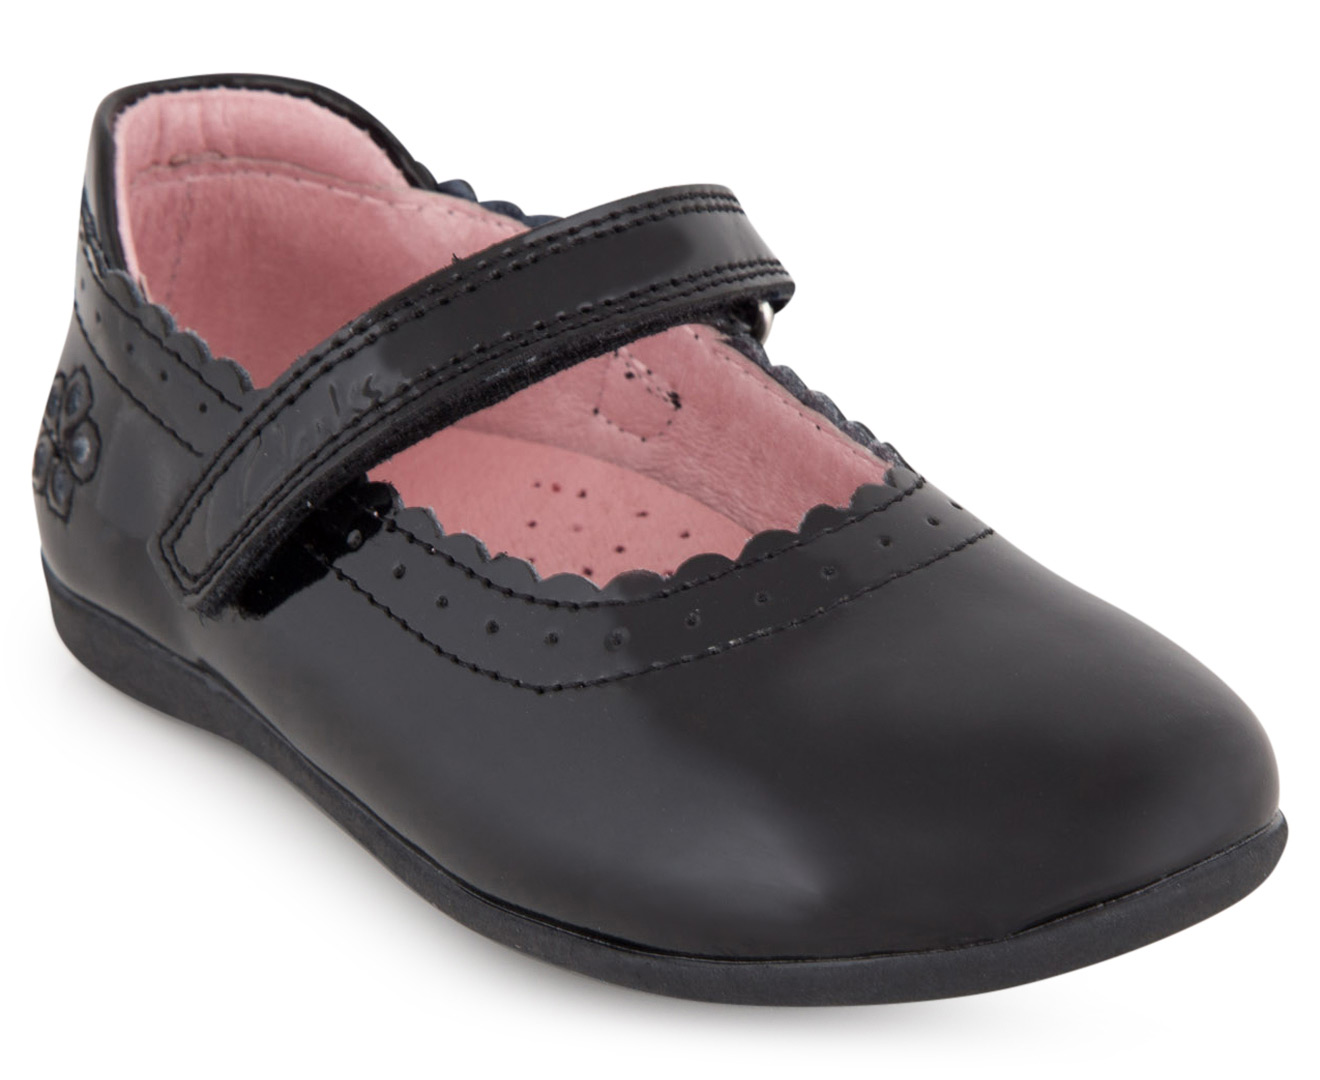 Clarks Kids' Jane Shoe - Black Patent | Great daily deals at Australia ...